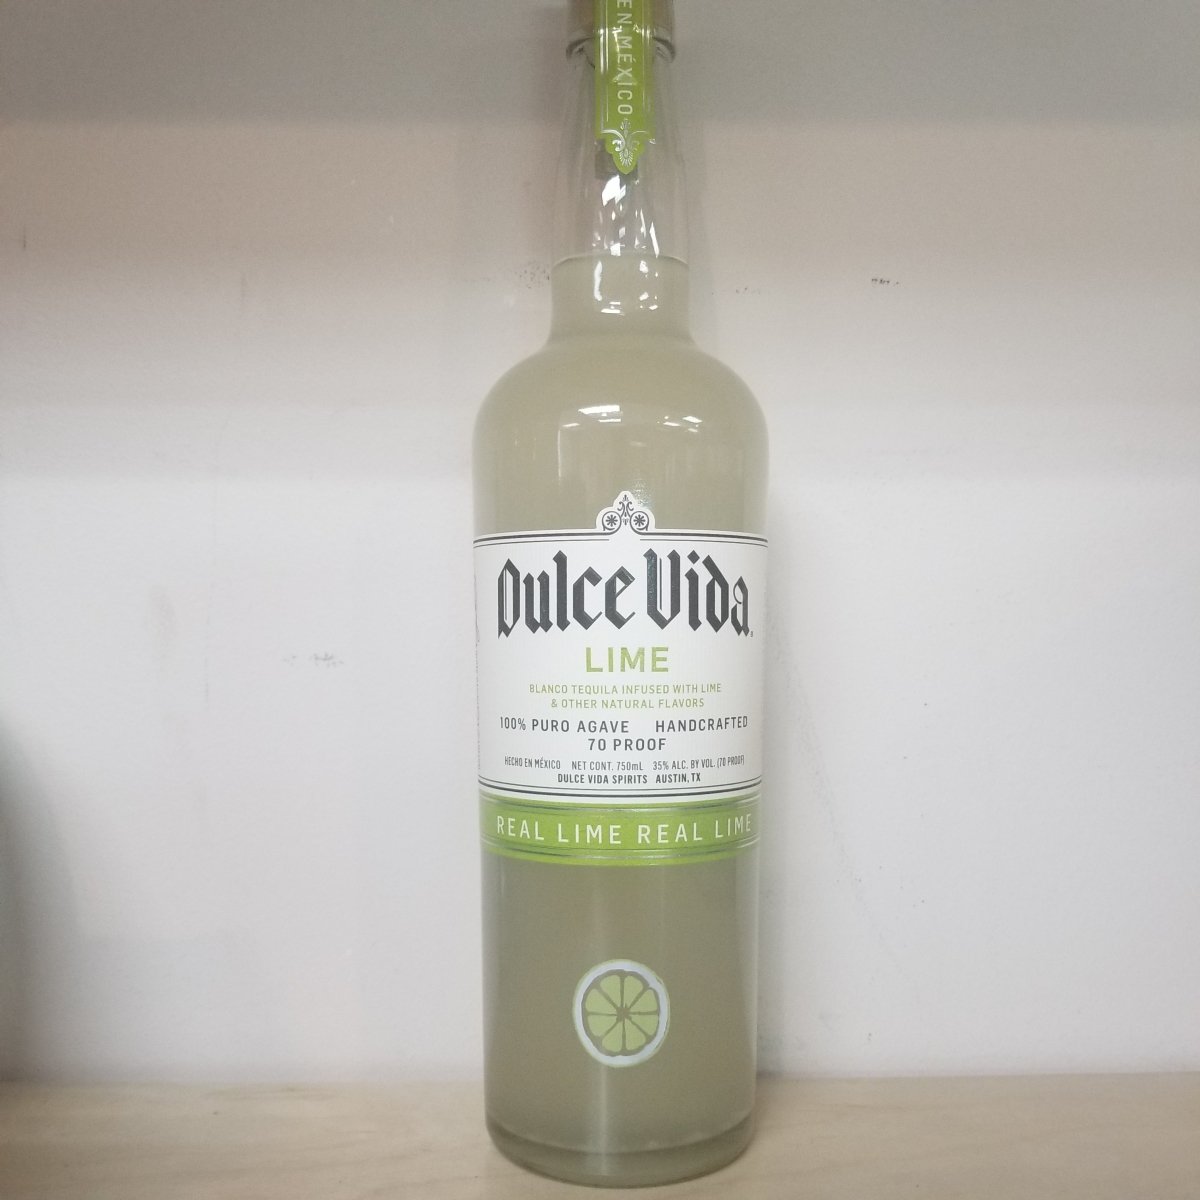 Dulce Vida Lime Tequila 750ml (Organic) (Better than Skinny Girl) - Sip & Say